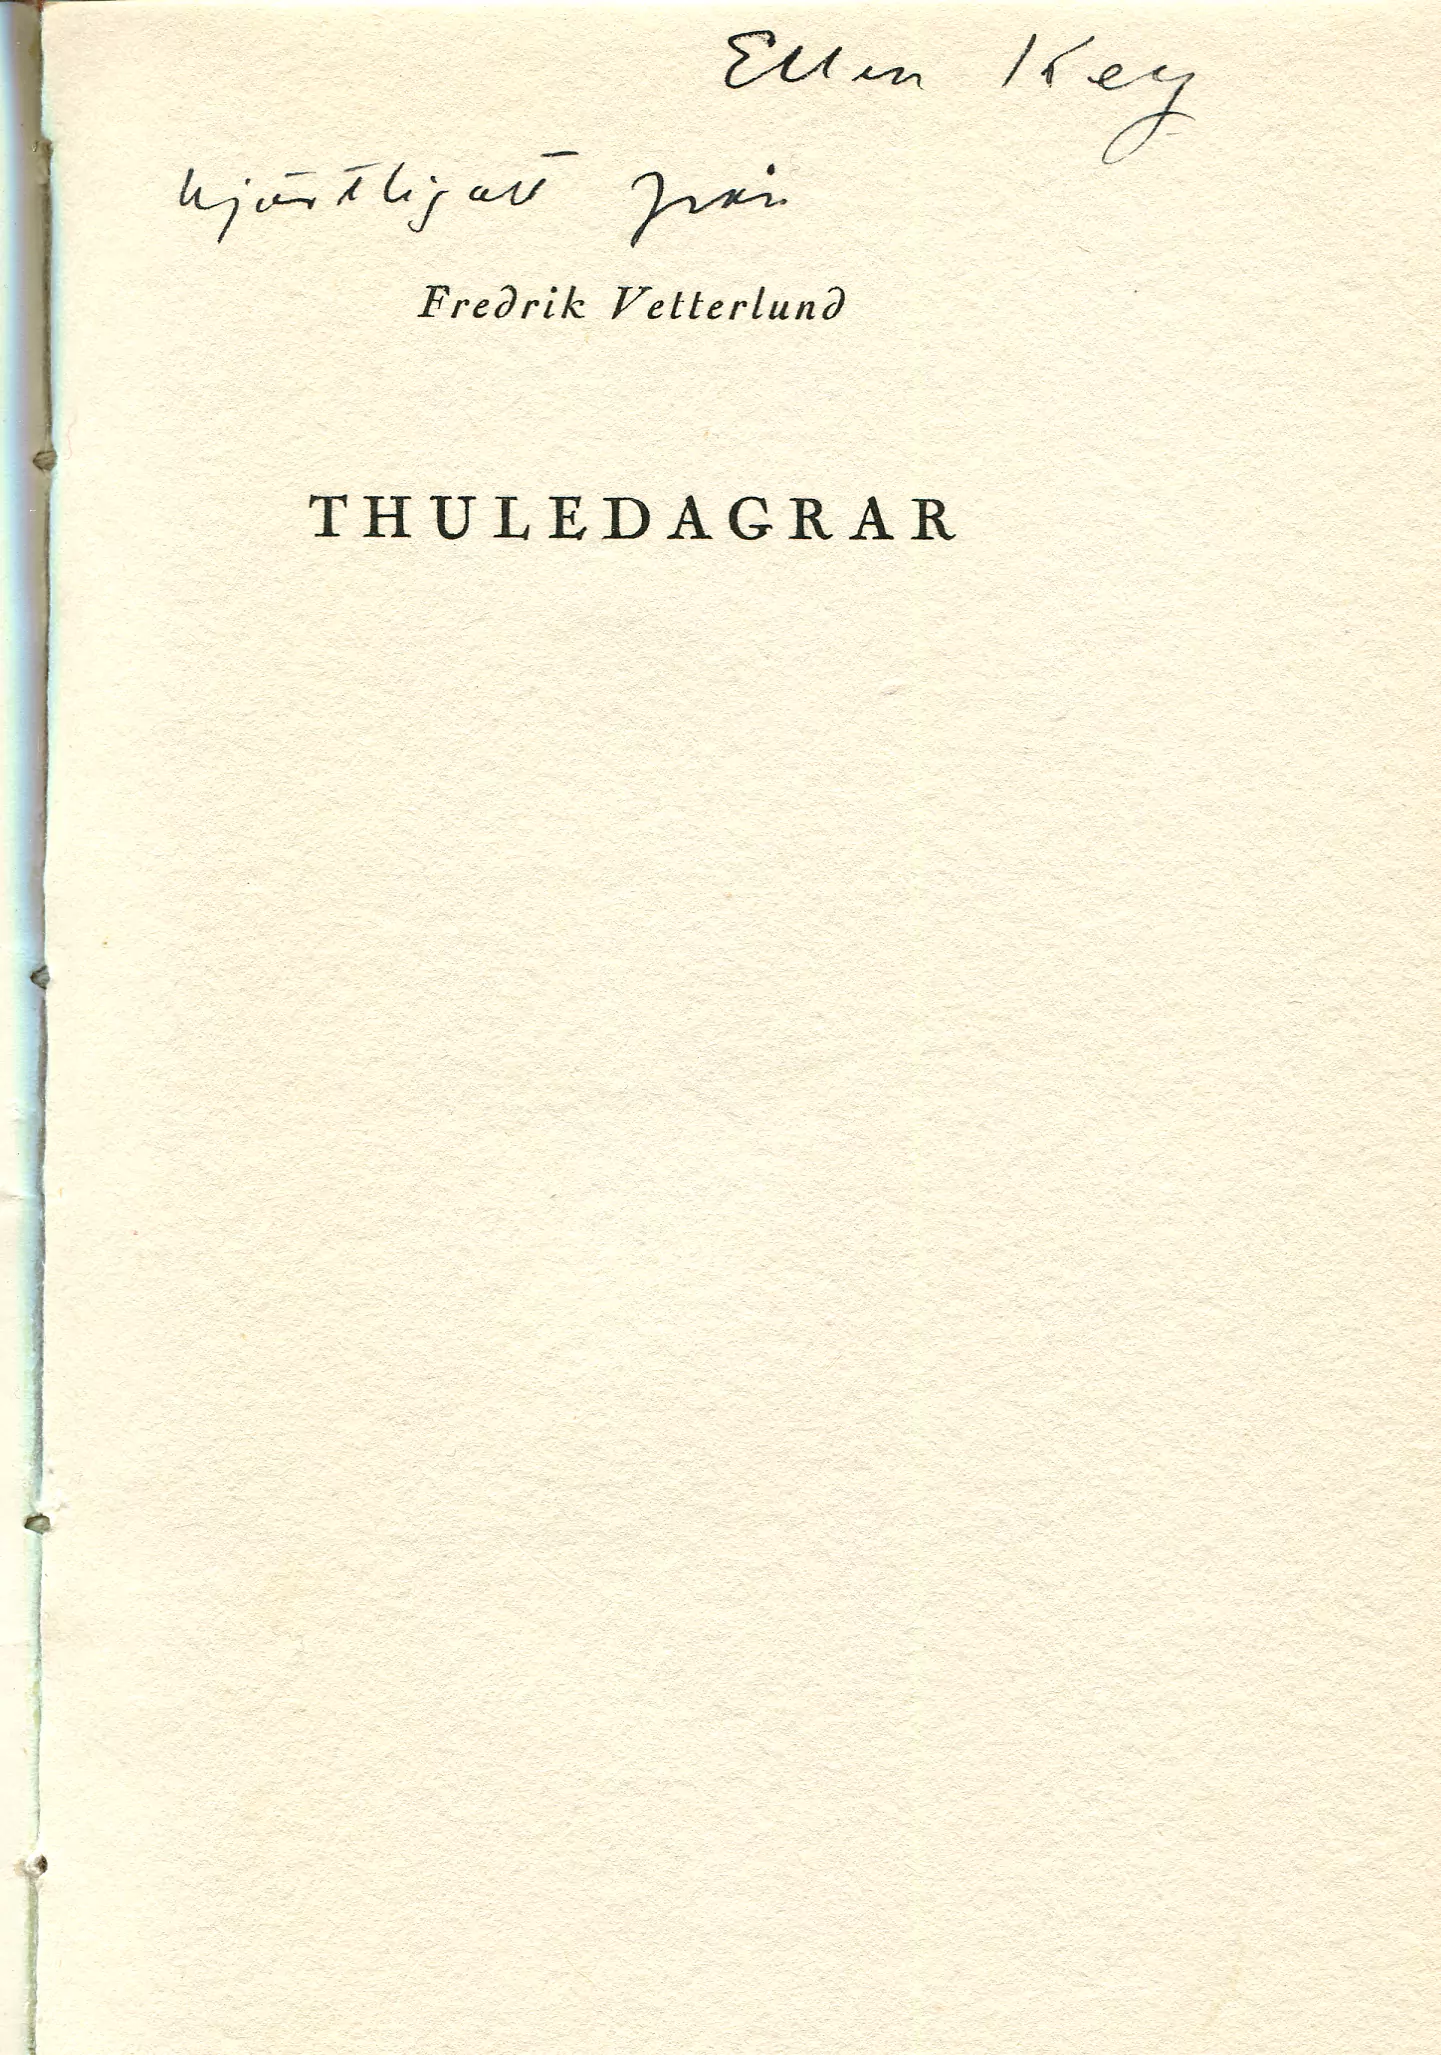 Thuledagrar , Stockholm 1922